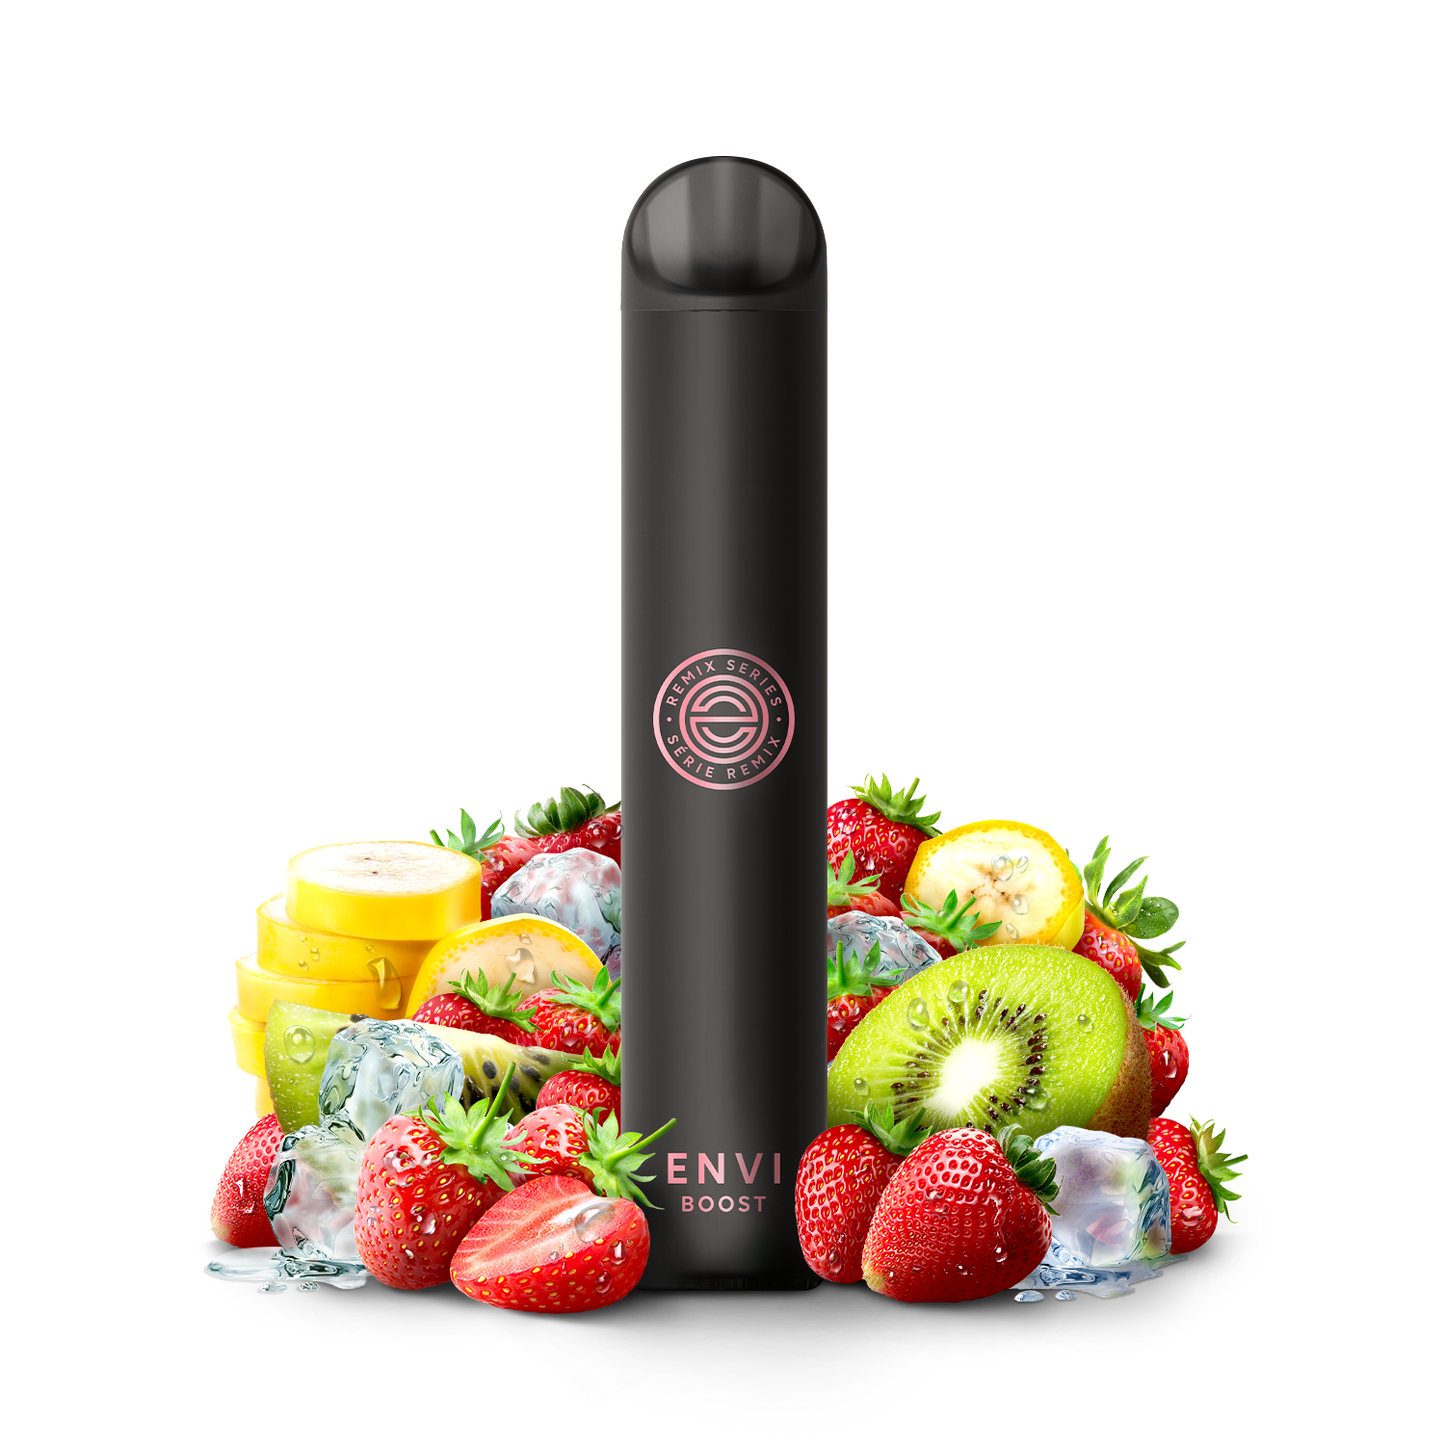 Envi Boost Disposable - Strawberry Kiwi Banana Ice